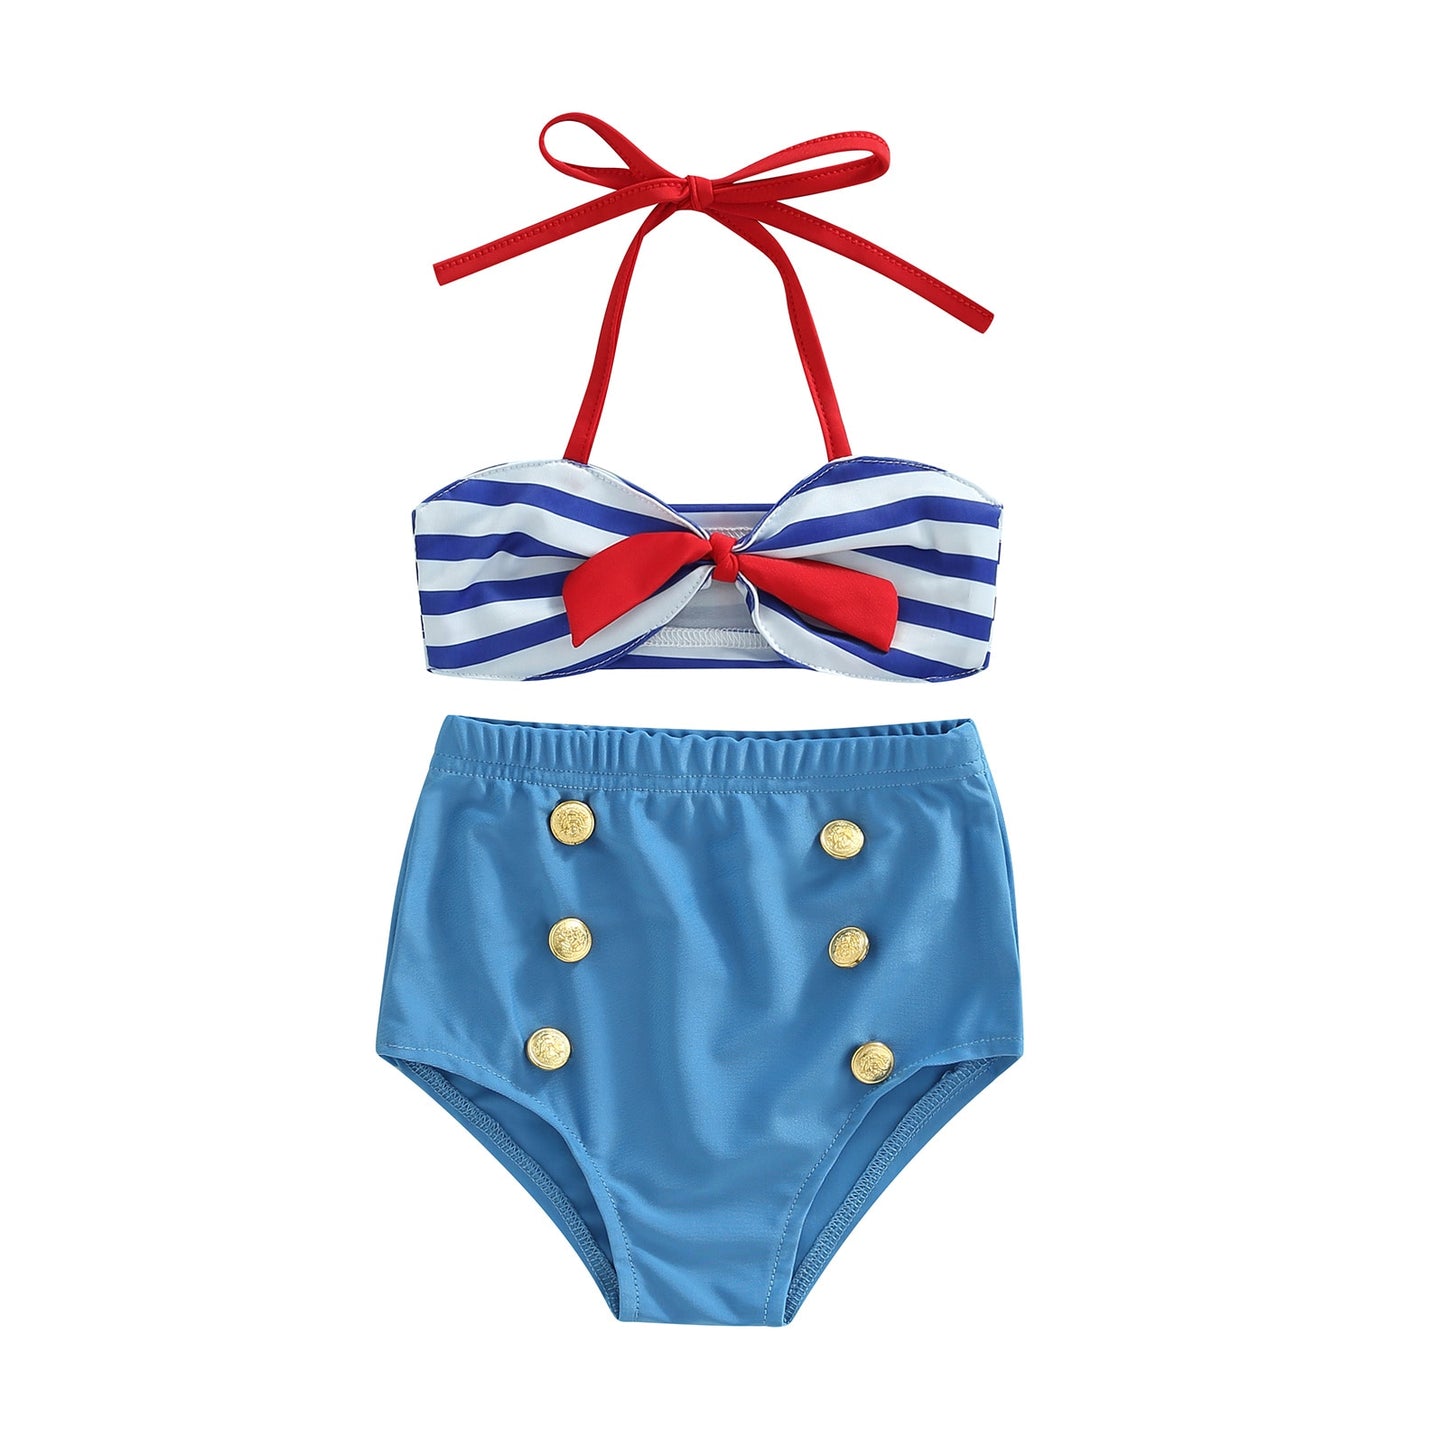 18M-6Y Infant Toddler Baby Kid Girls Bikinis Sets Bow Tops Button Shorts Swimsuit Children Beachwear Bathing Suit Swimwear